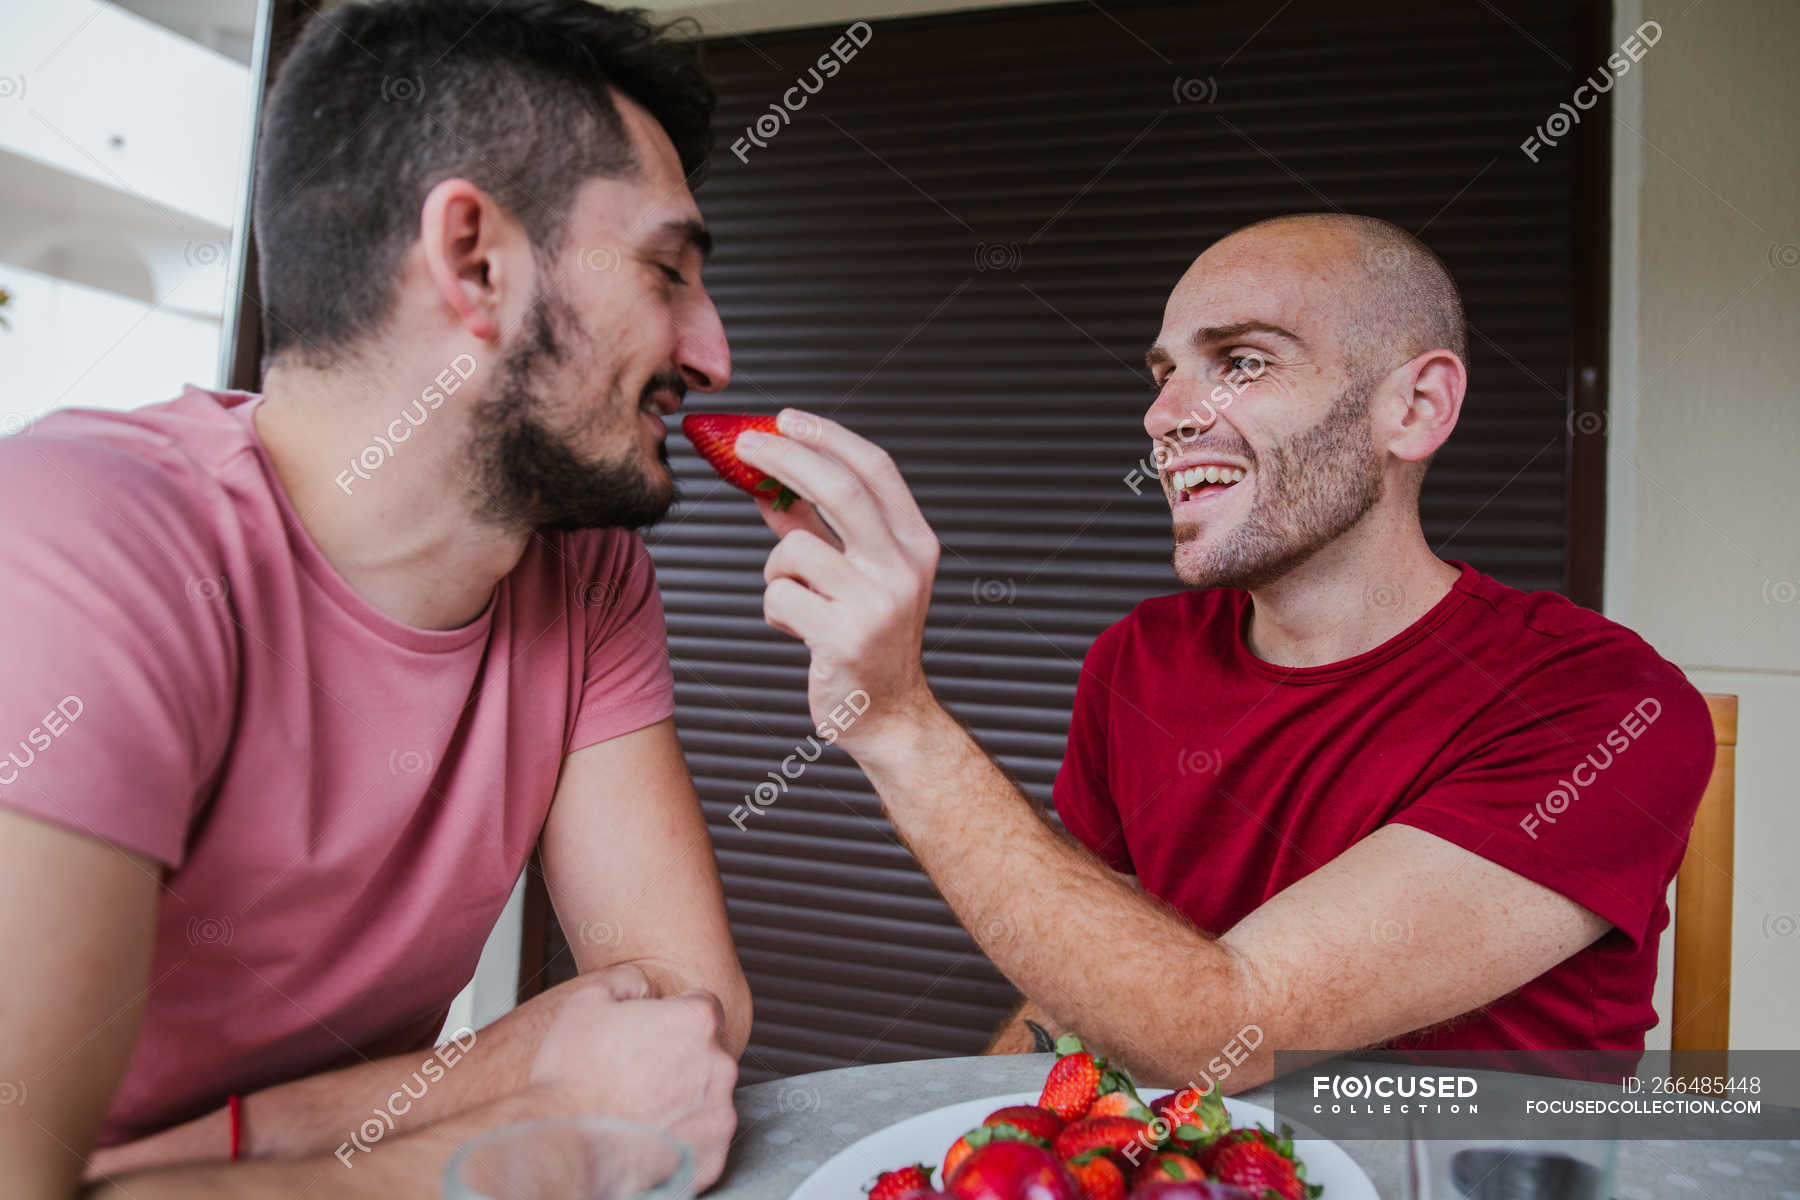 focused_266485448-stock-photo-cheerful-gay-couple-eating-strawberries.jpg